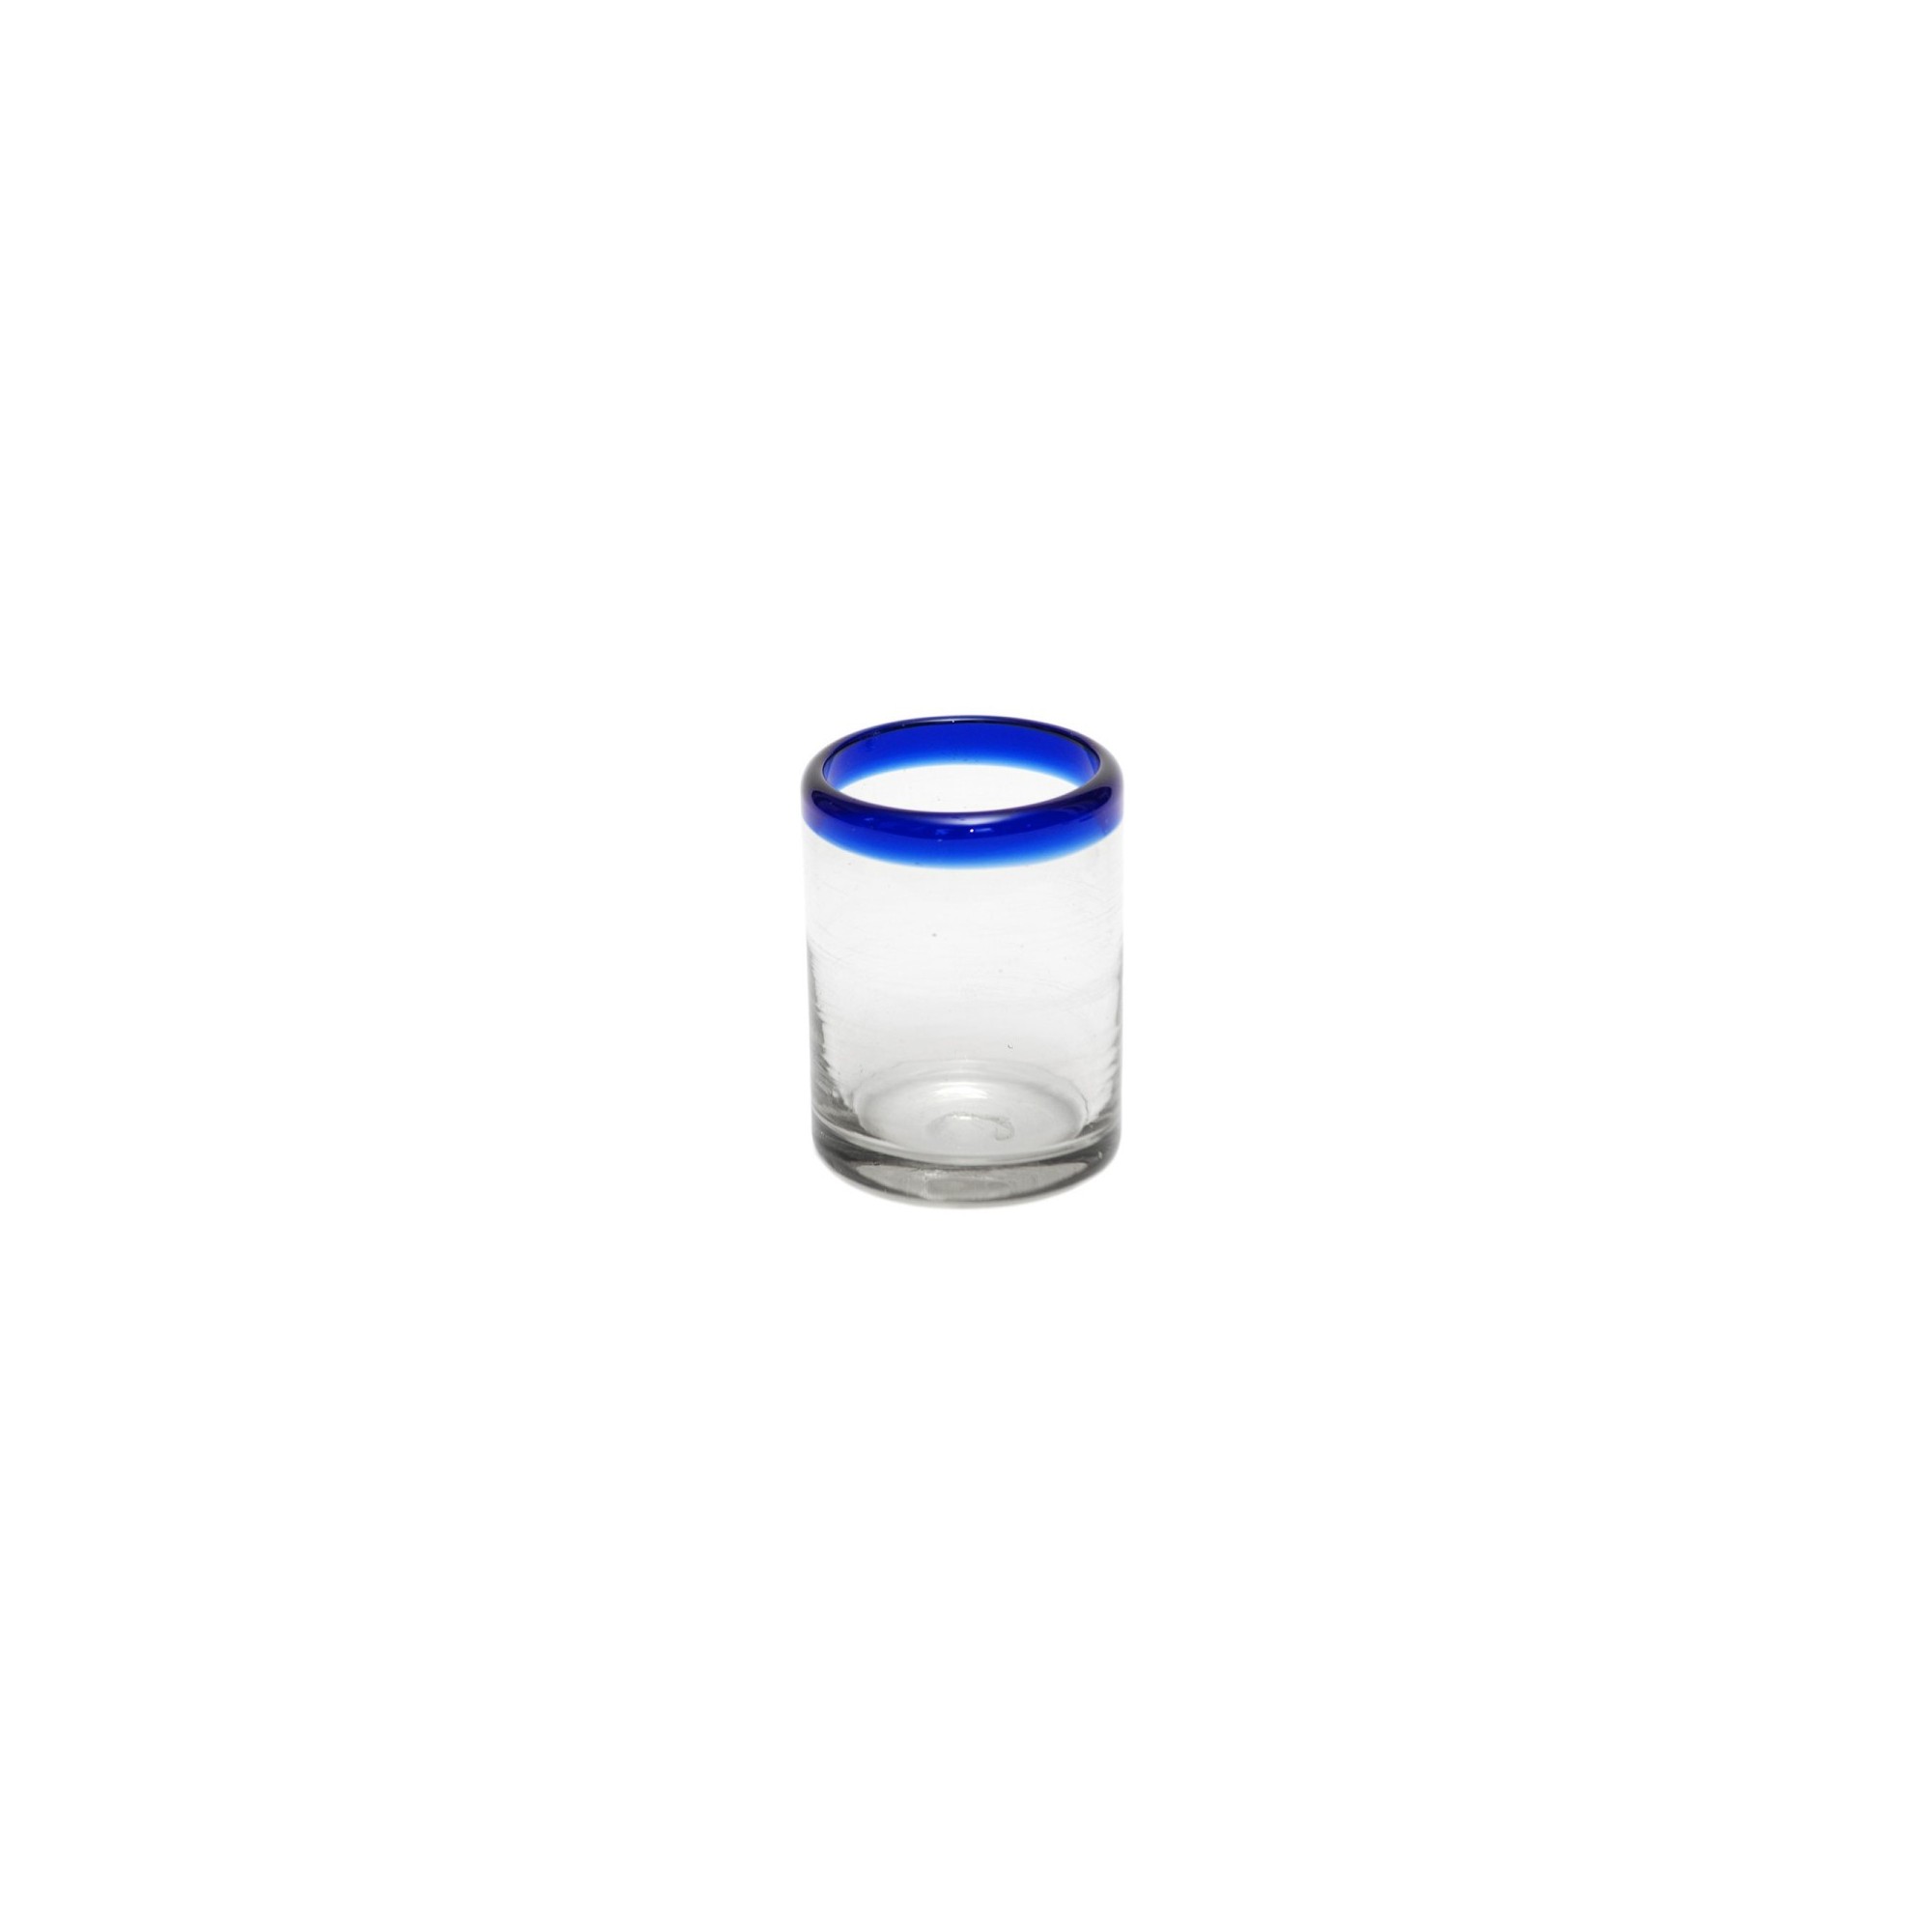 Mundgeblasenes Saftglas mit blauem Rand 100ml